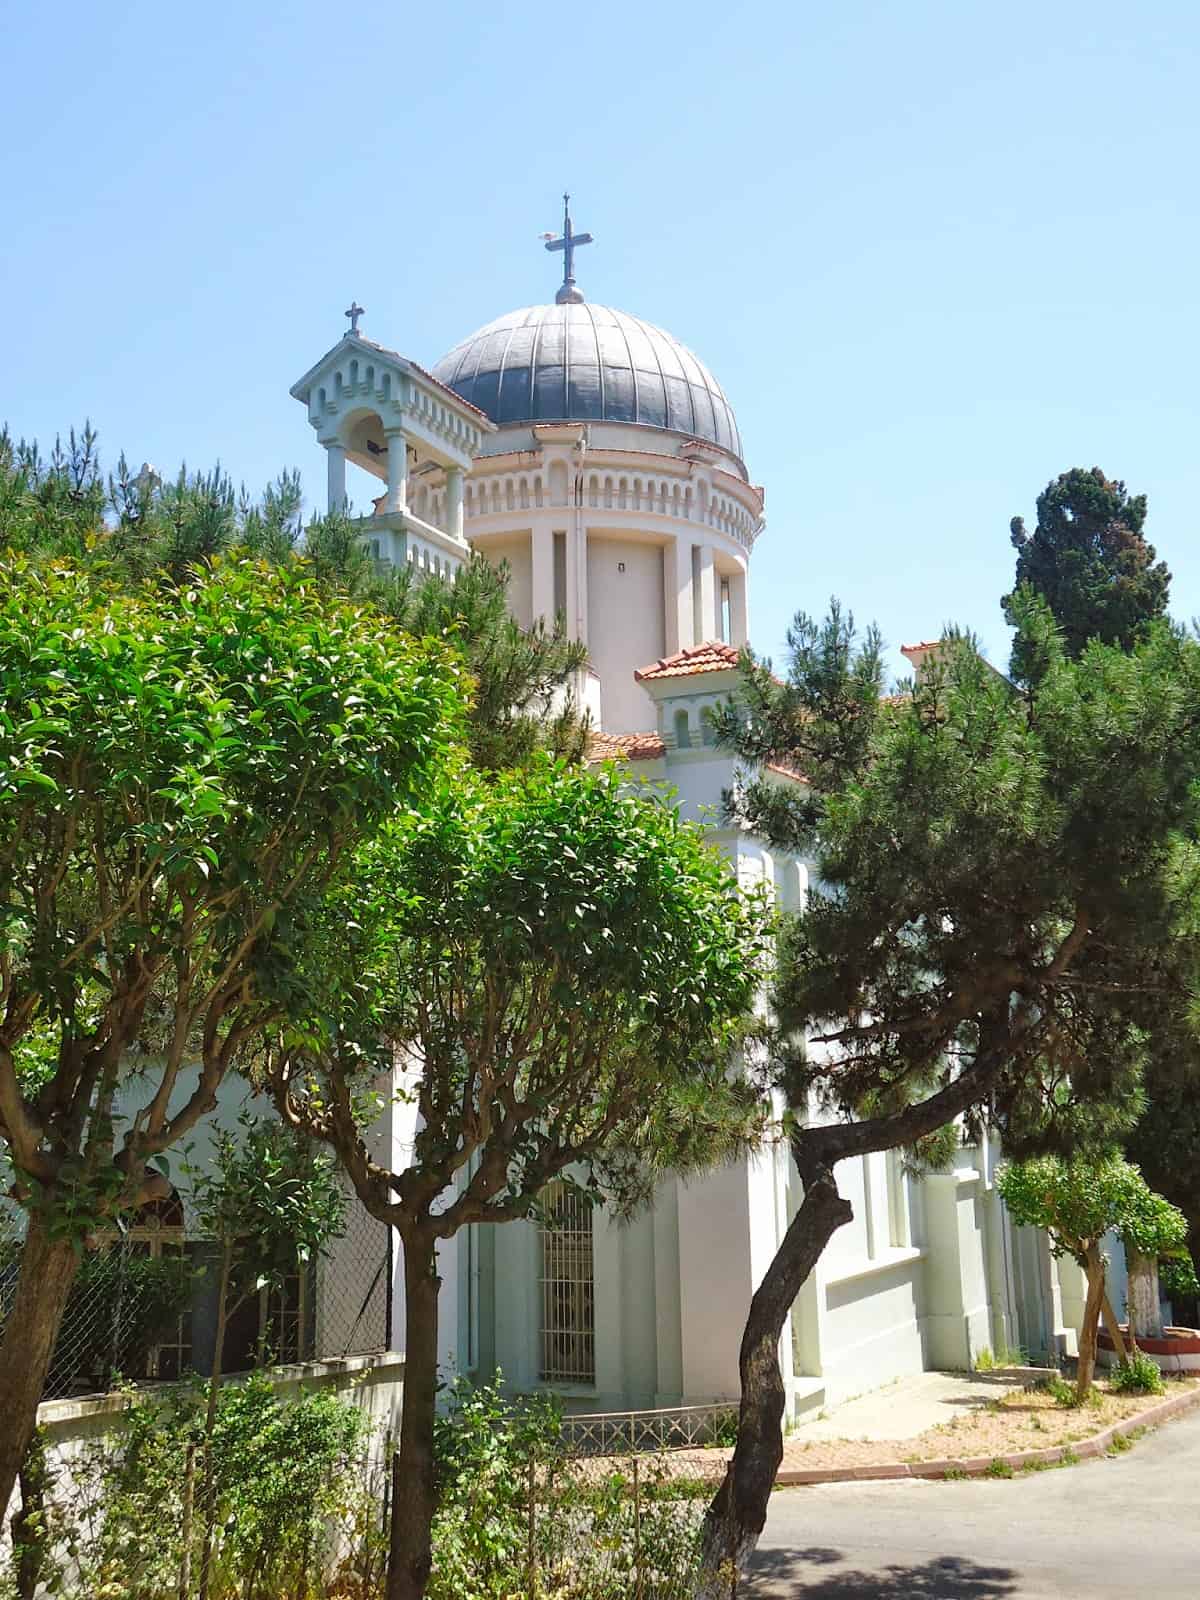 St. John Greek Orthodox Church on Burgazada, Adalar, Istanbul, Turkey